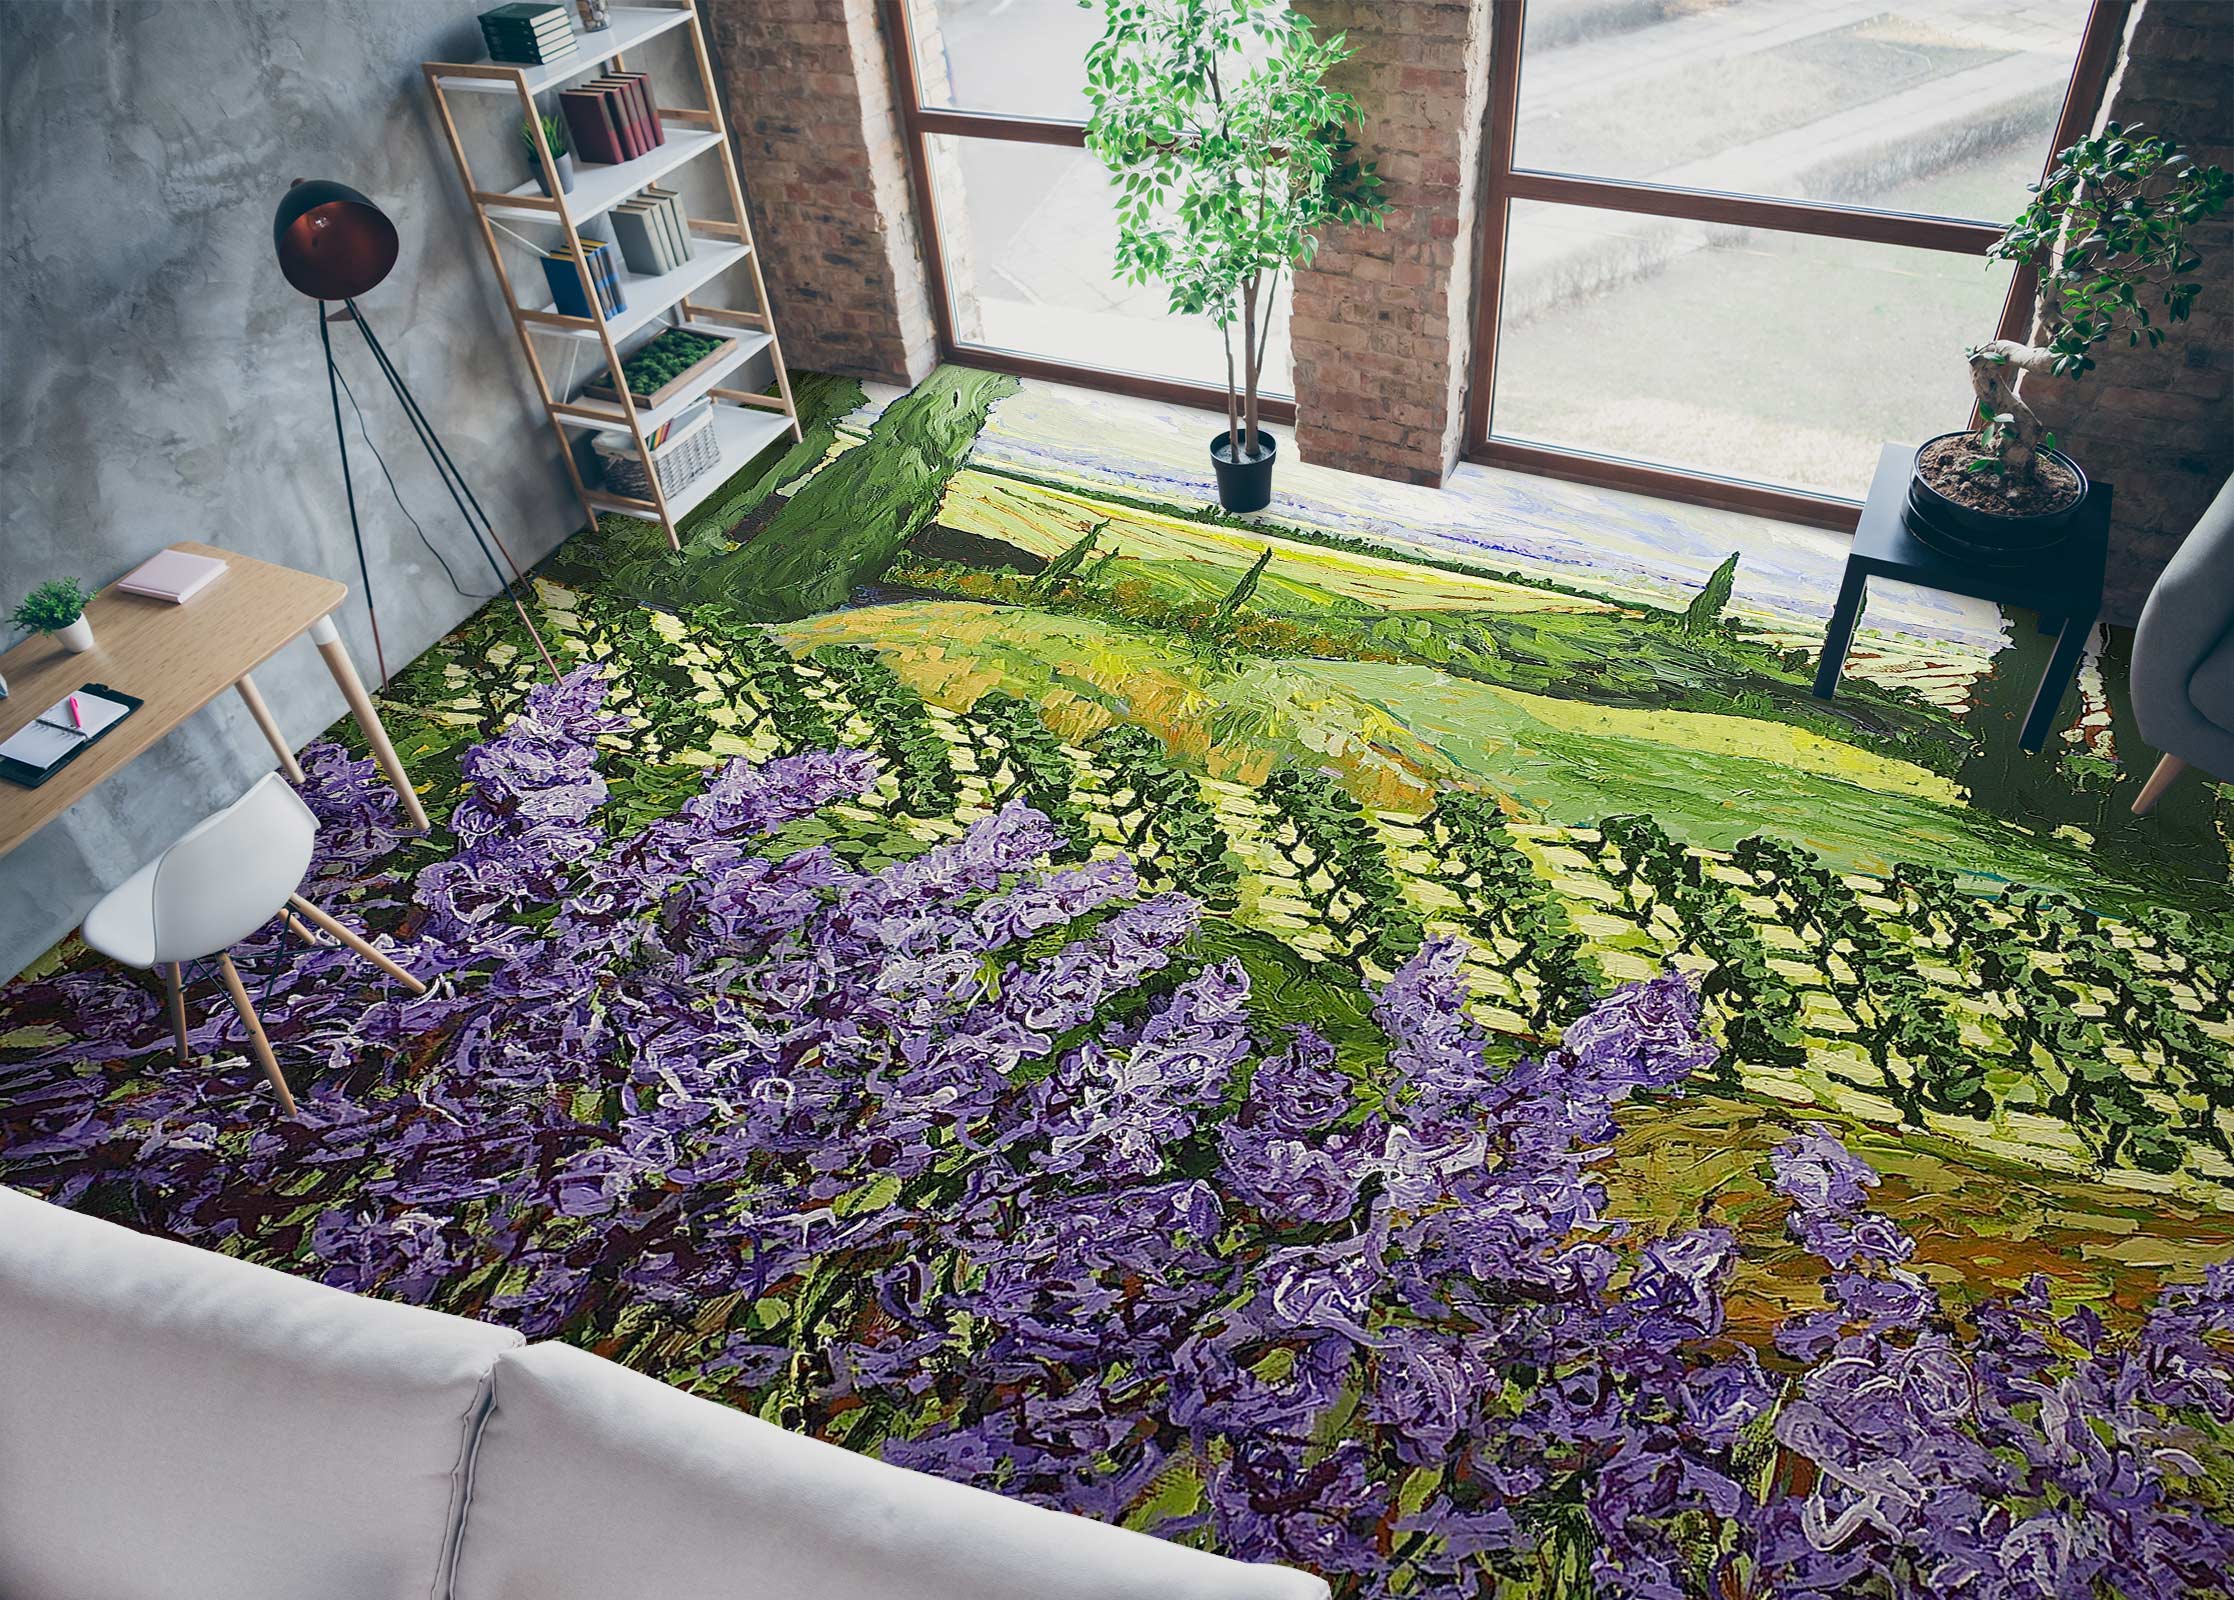 3D Purple Flowers Hillside Field 9523 Allan P. Friedlander Floor Mural